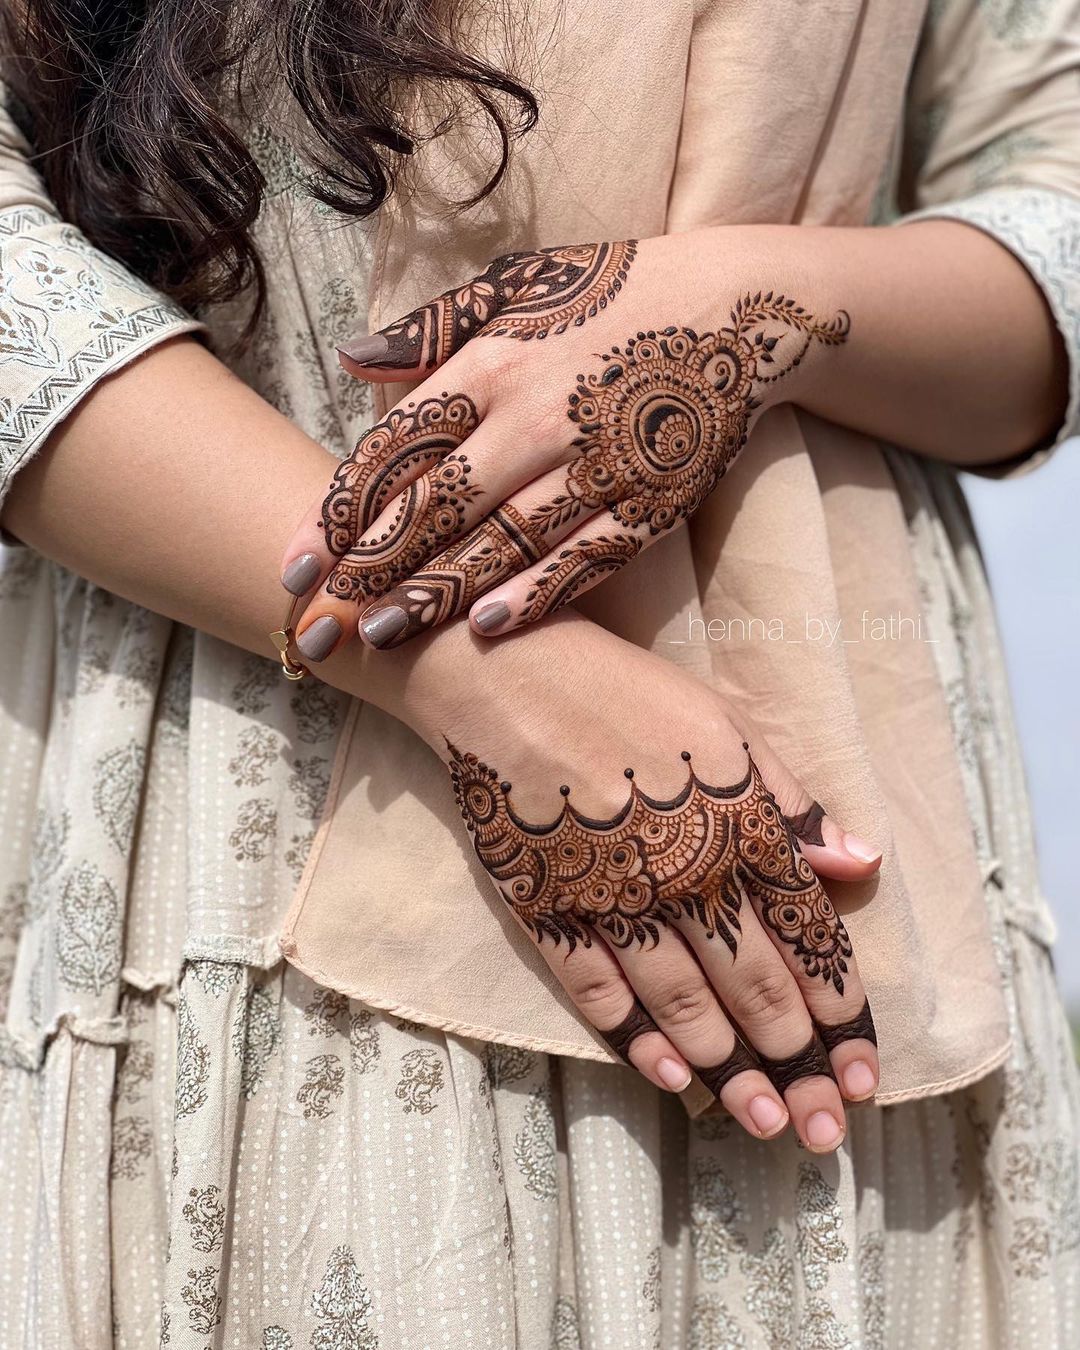 henna on arm by henna by fathi